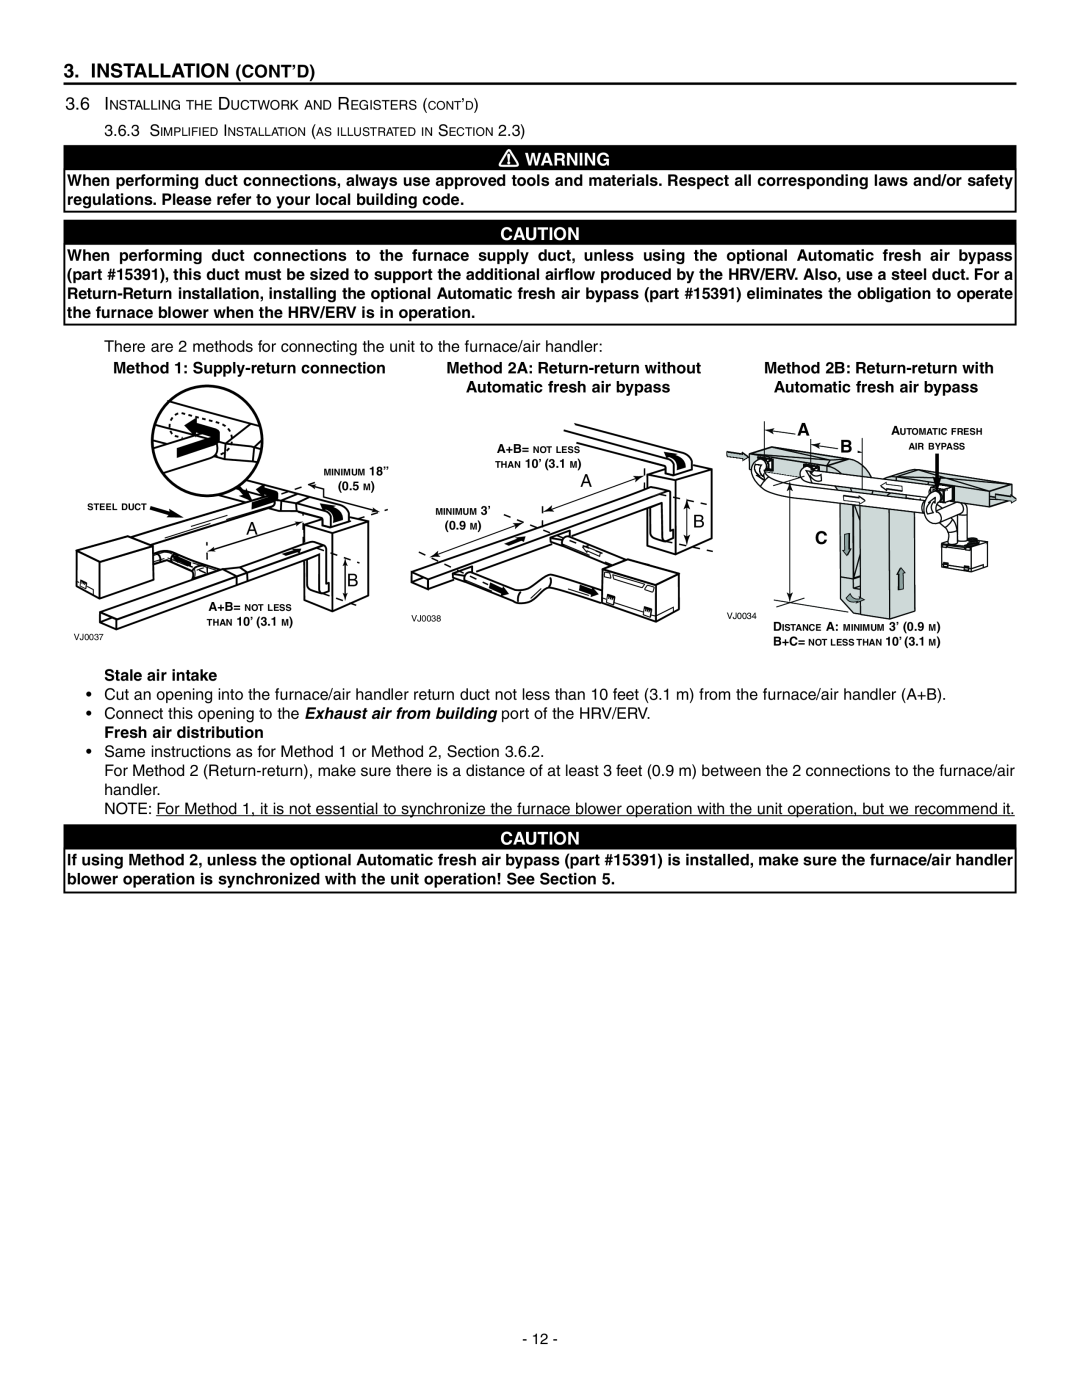 Broan ERV90HCS, HRV90HS installation instructions Installation Cont’D 